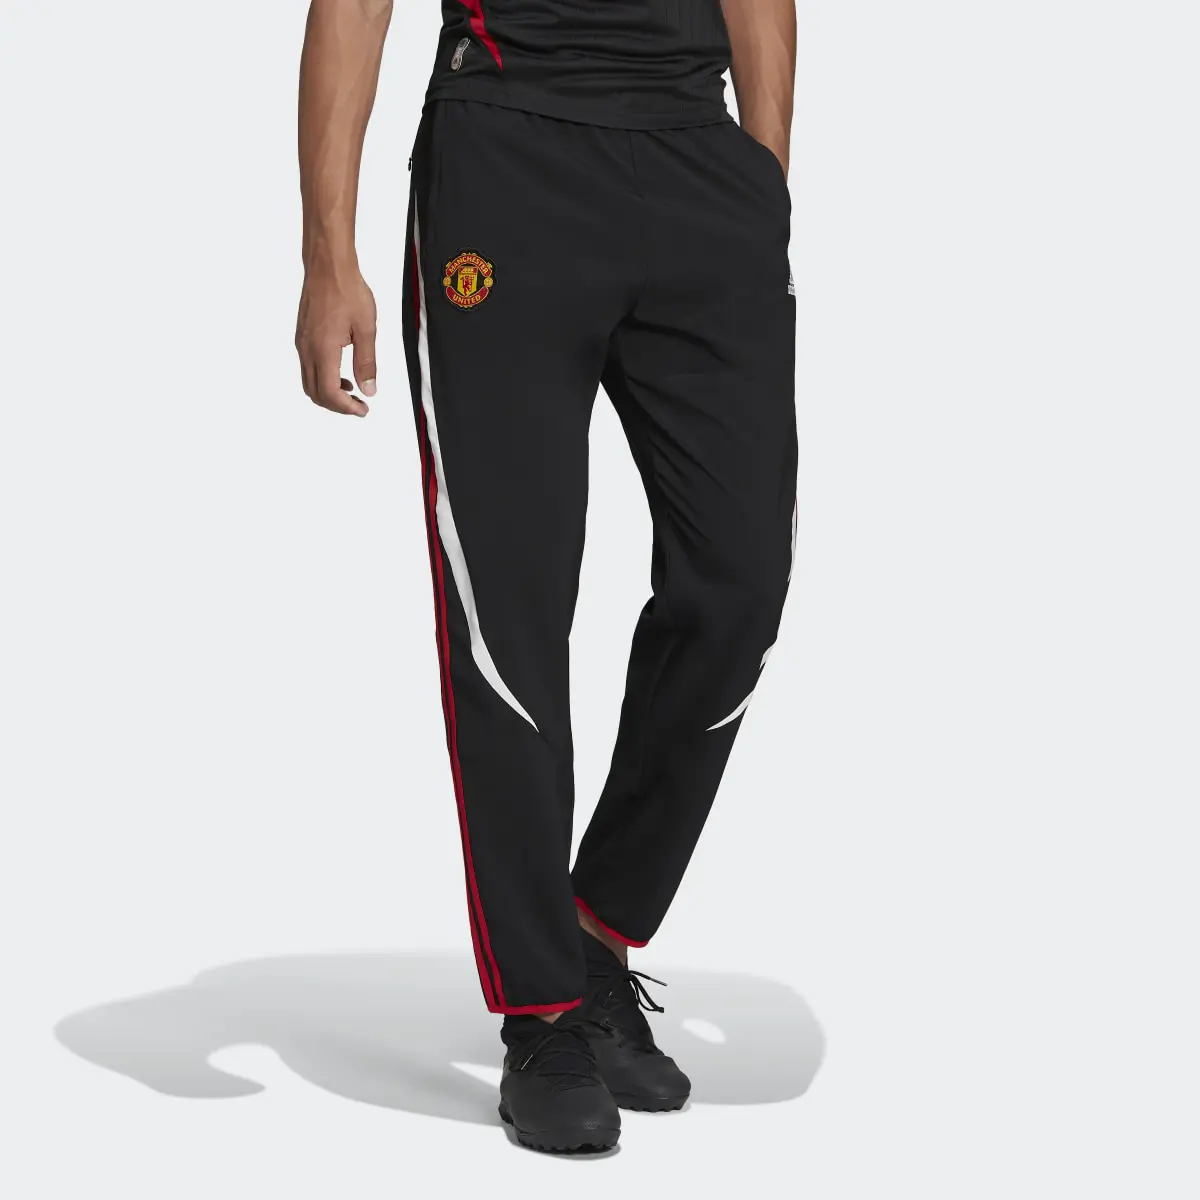 Adidas Pants Teamgeist Manchester United Tejidos. 1